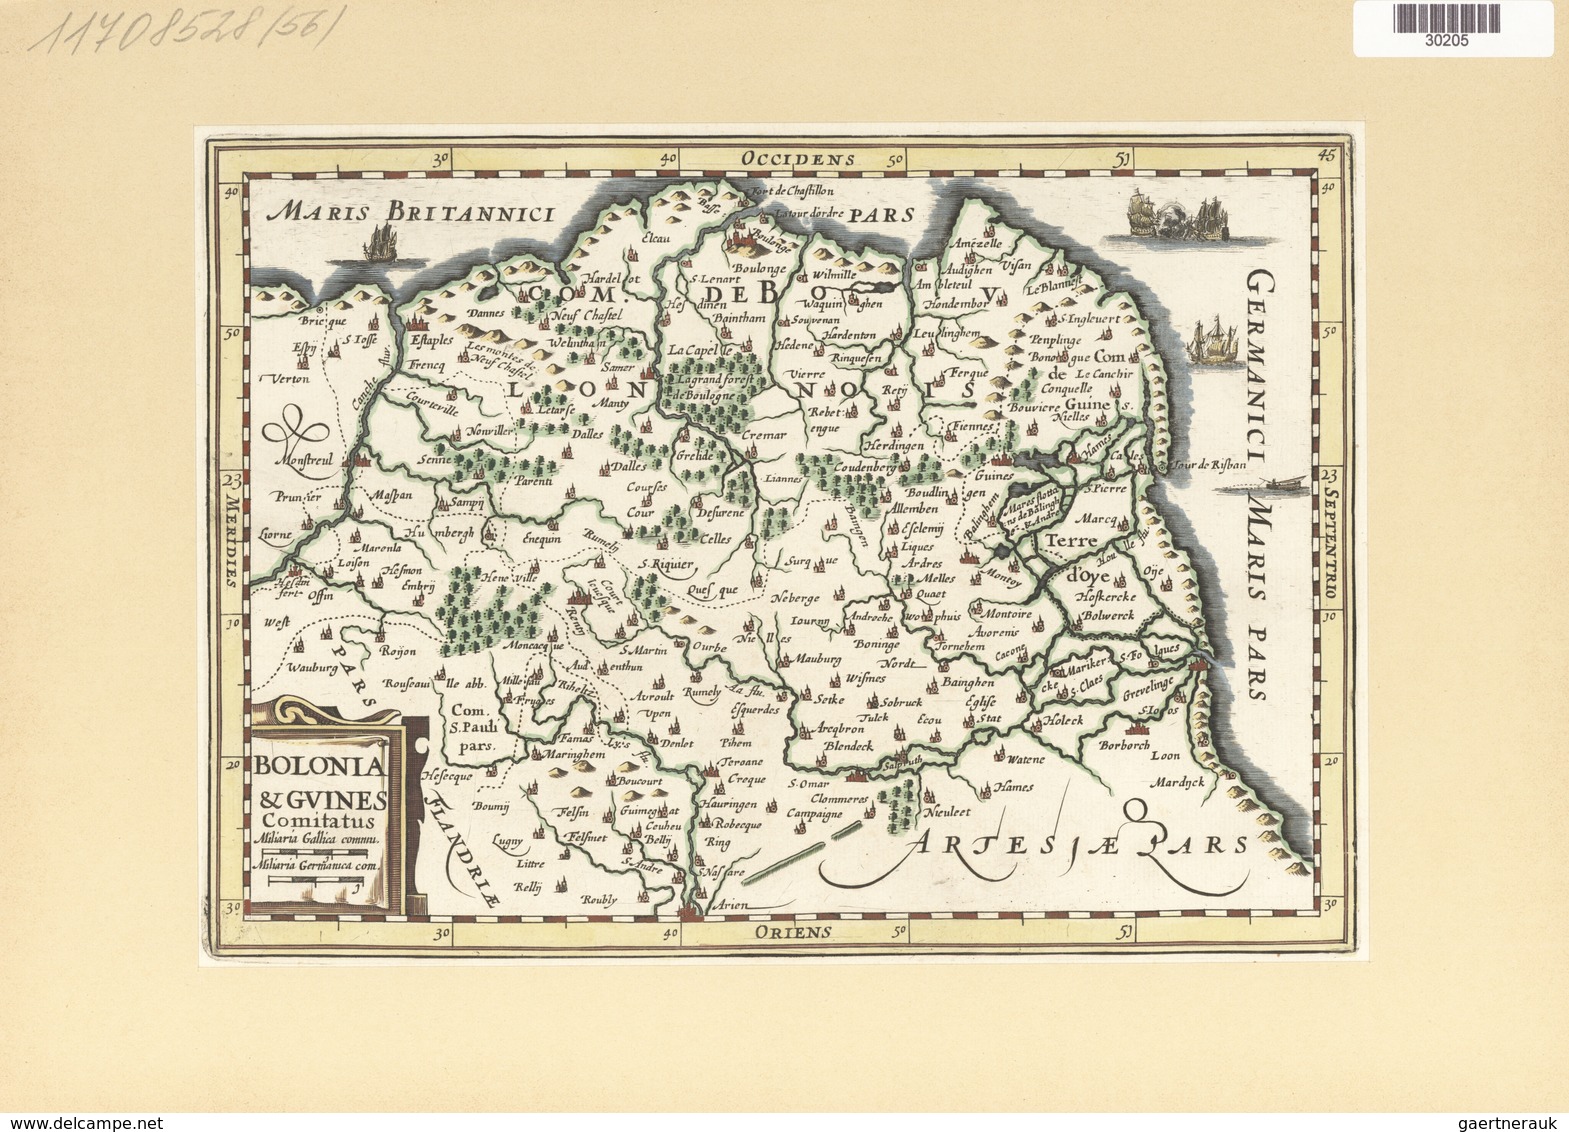 Landkarten Und Stiche: 1734. Bolonia & Guines Comitatus, Published In The Mercator Atlas Minor 1734 - Geography